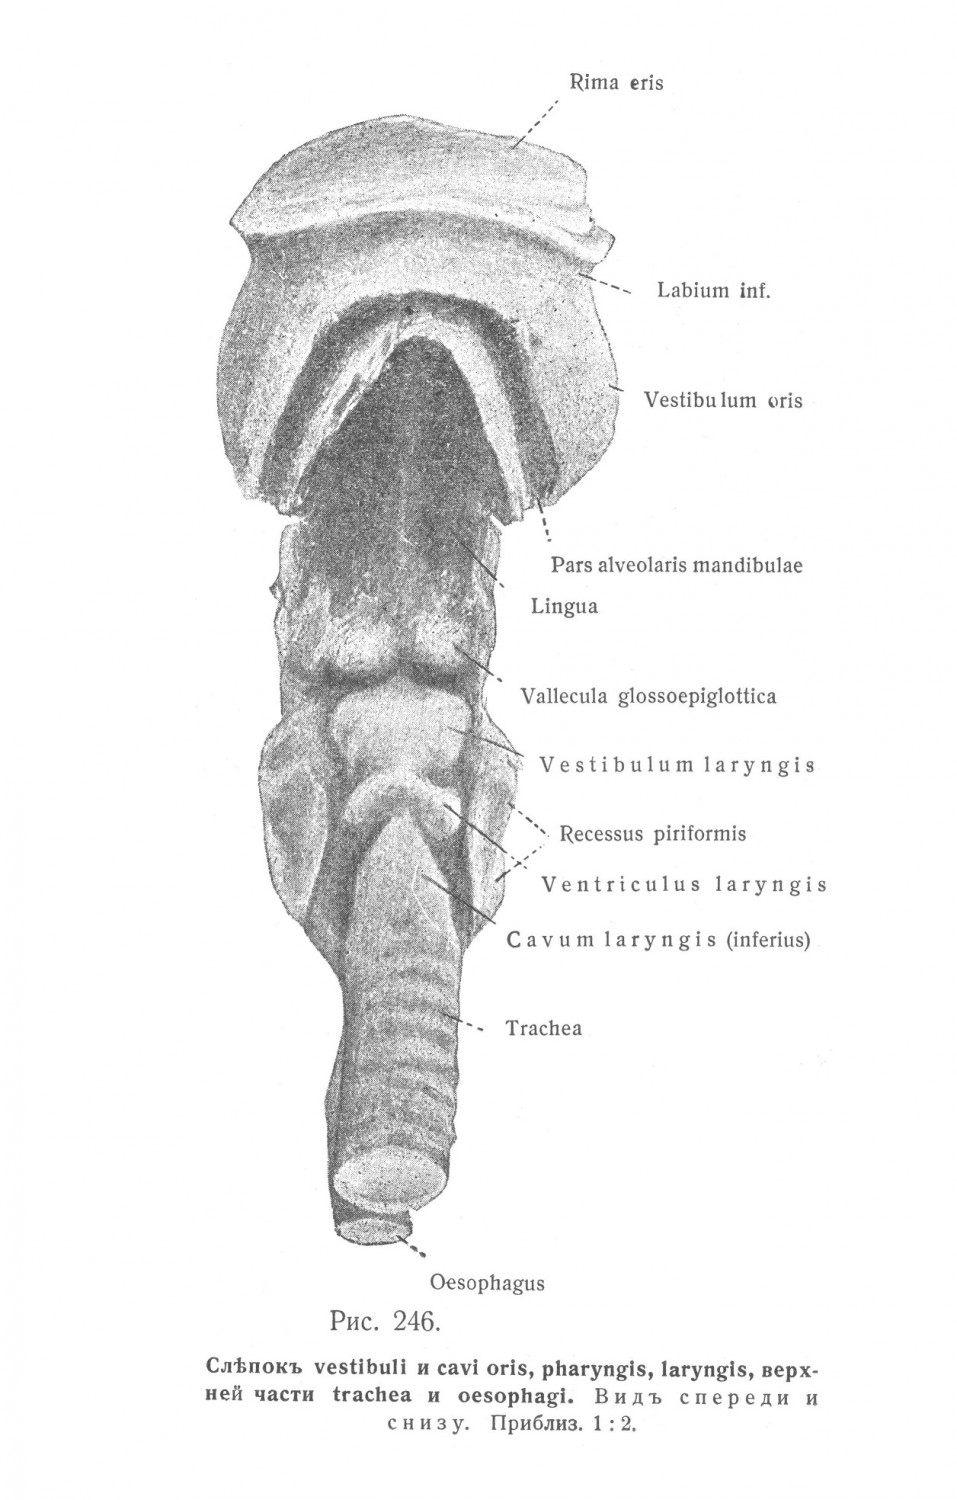 Слепок vestibuli и cavi oris, pharyngis, laryngis, верхней части trachea и oesophagi